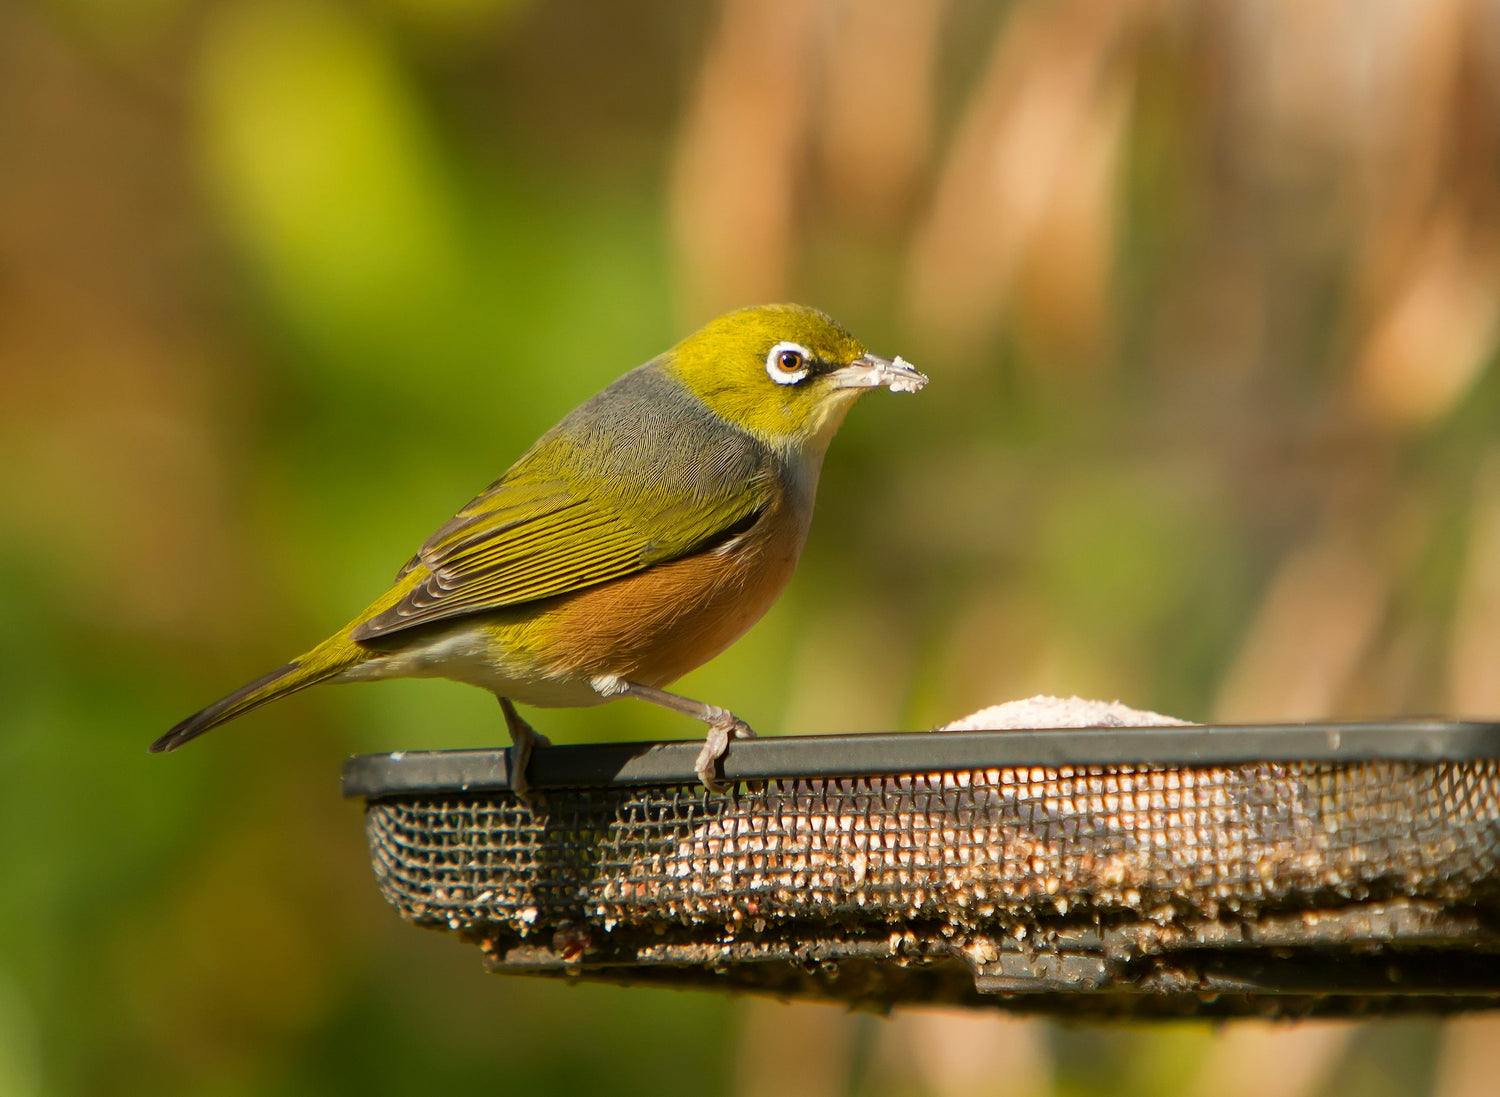 Feeding garden birds - should we do it?